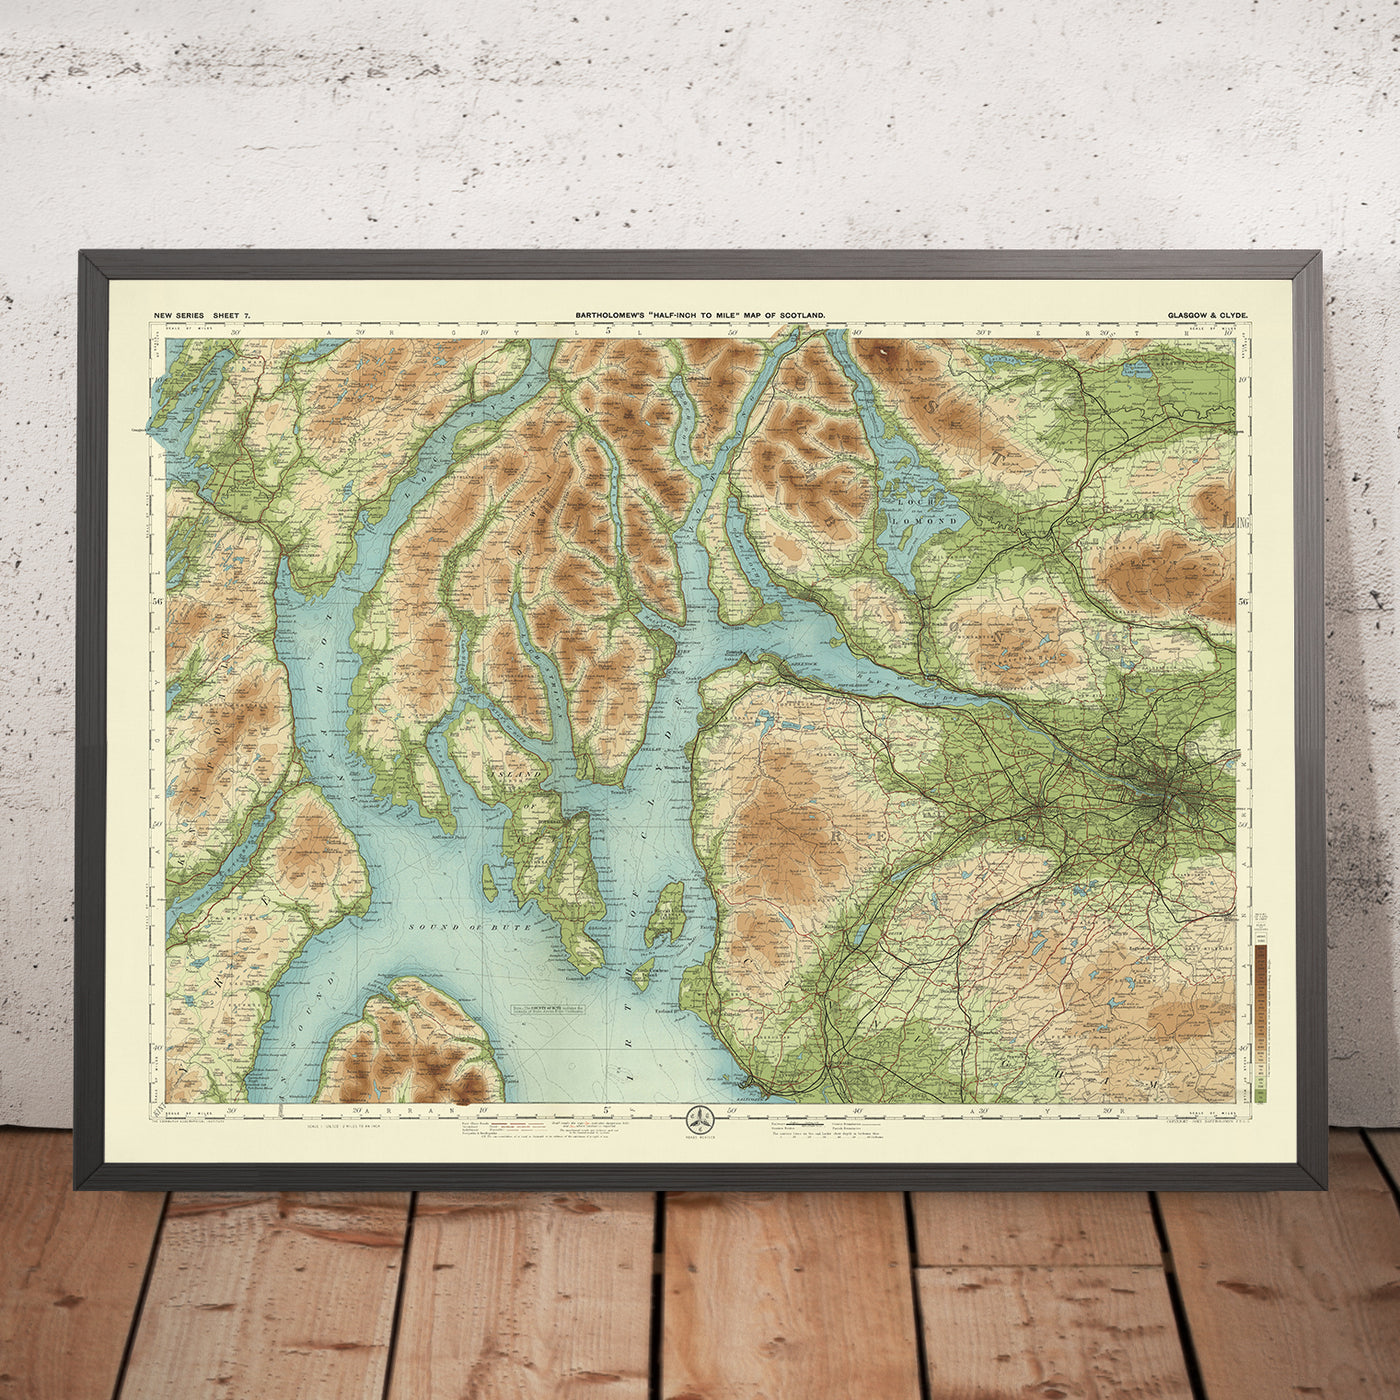 Old OS Map of Glasgow & Clyde by Bartholomew, 1901: Loch Lomond, Firth of Clyde, Arrochar Alps, Trossachs, Dumbarton Castle